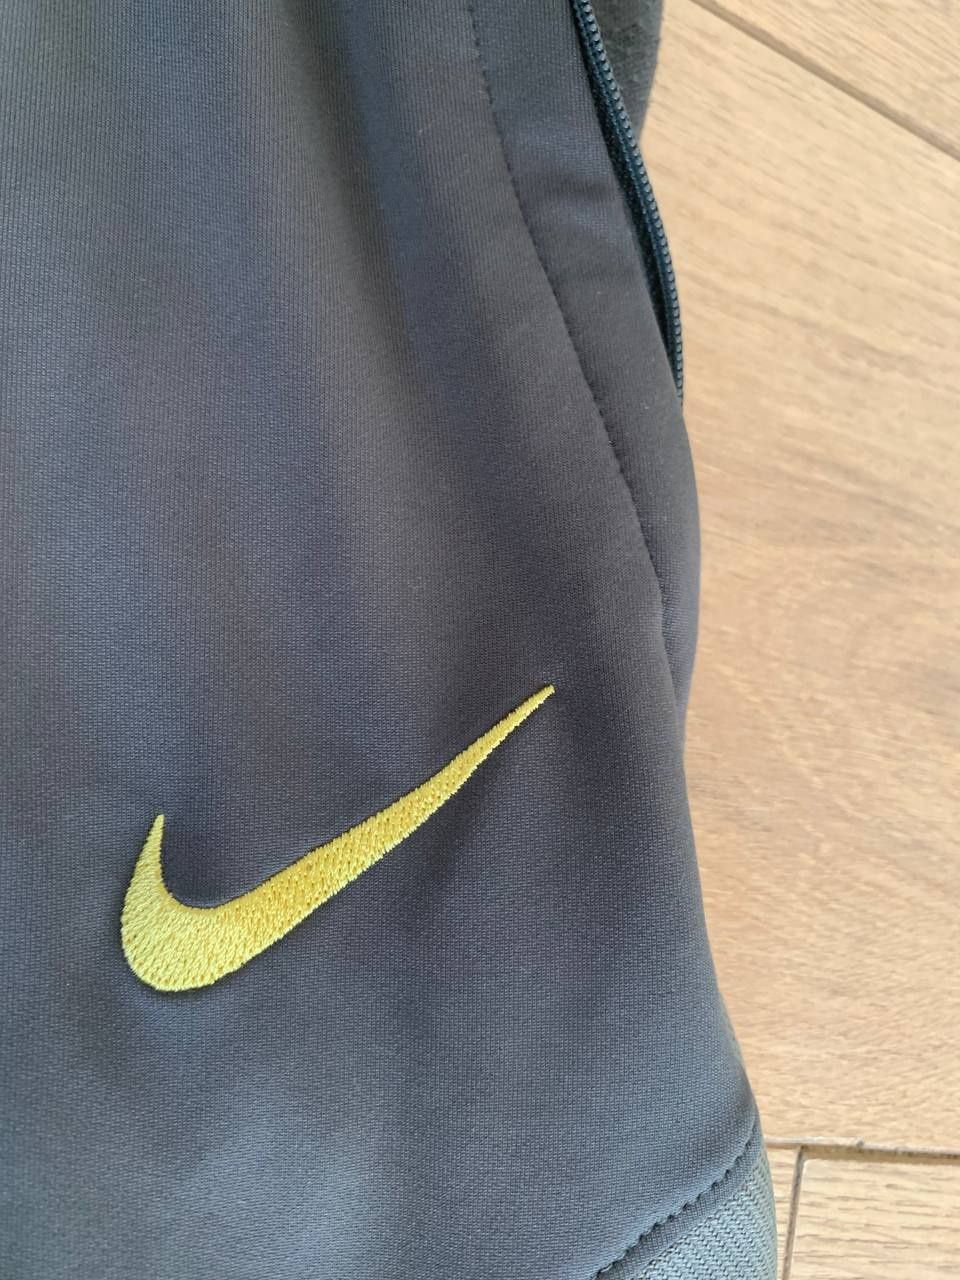 Тренувальні штани Nike Liverpool FC Strike Knit Pants DB0243-010